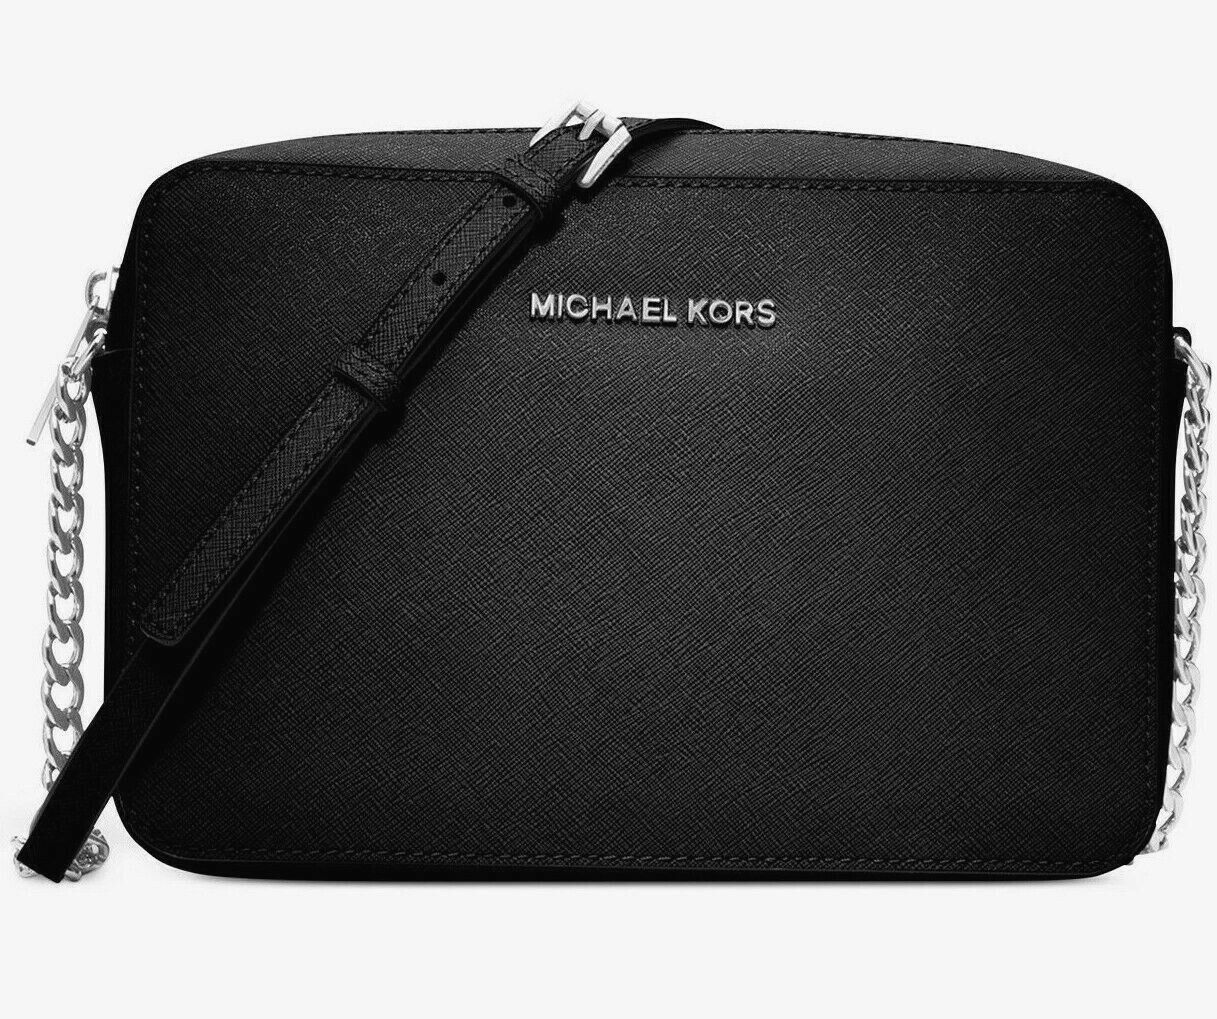 New Michael Kors Jet Set Item Large EW zip chain crossbody Bag Black / Dust bag